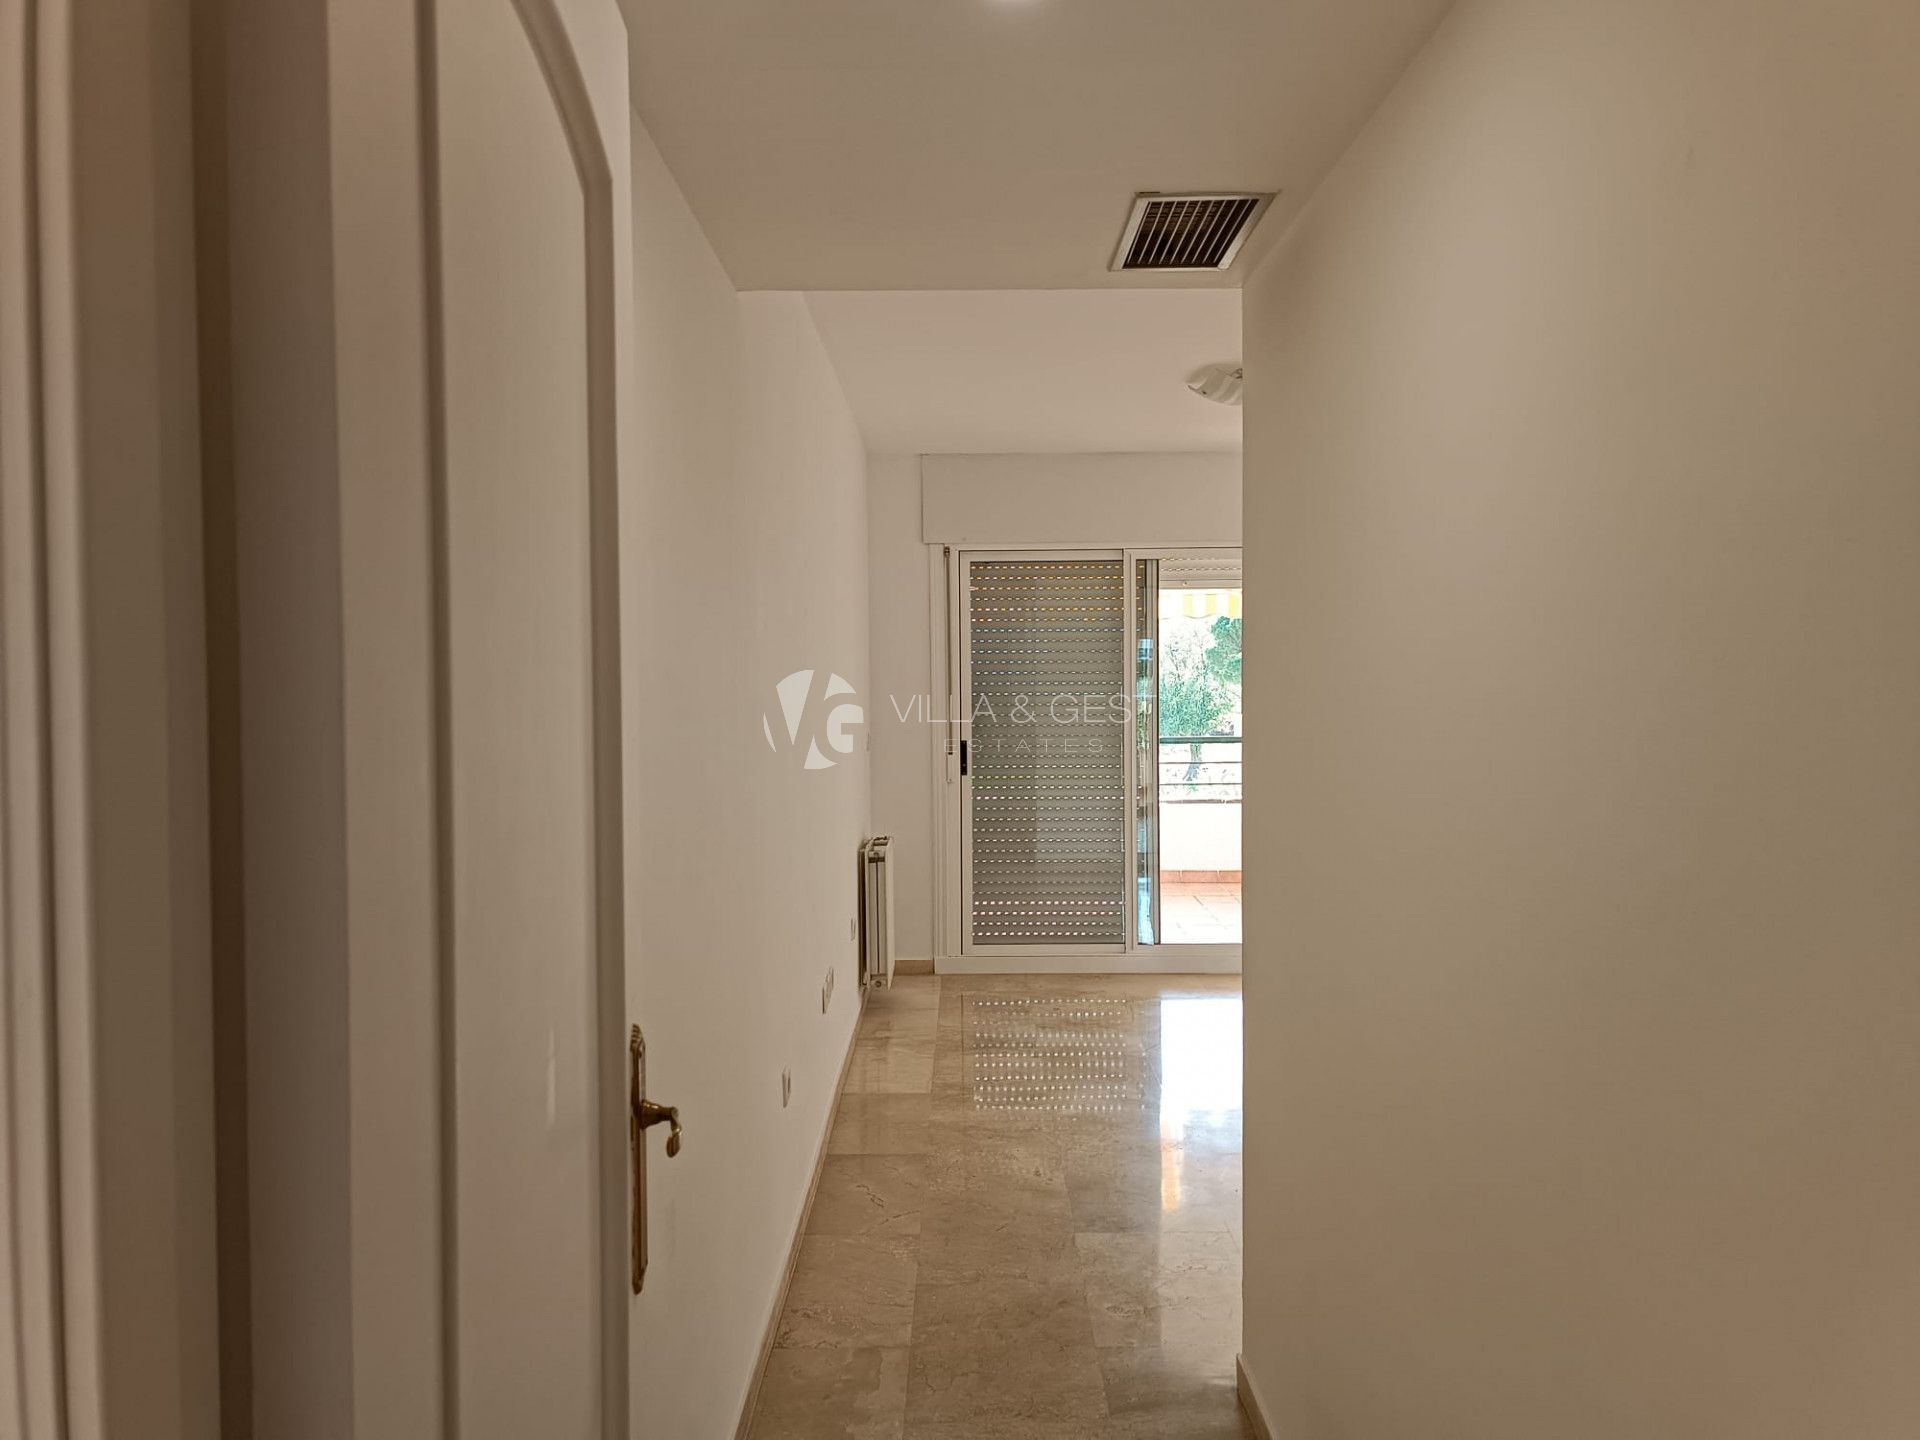 Ground Floor Apartment for sale in San Pedro de Alcantara, Costa del Sol